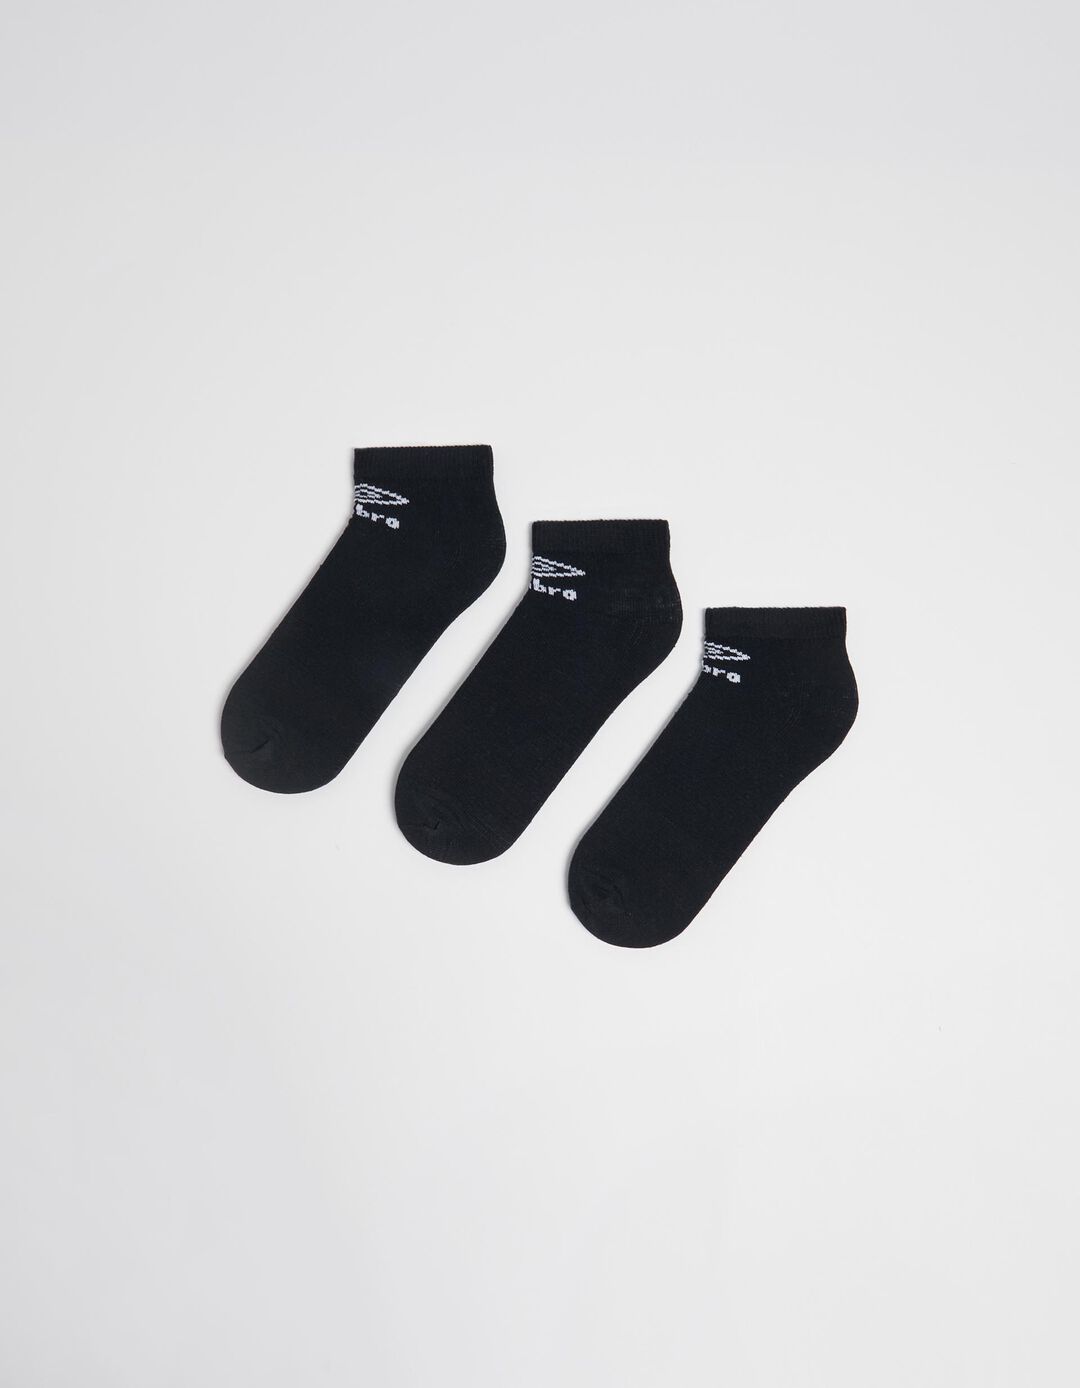 Pack 3 Pairs of Ankle Socks 'Umbro', Women, Black